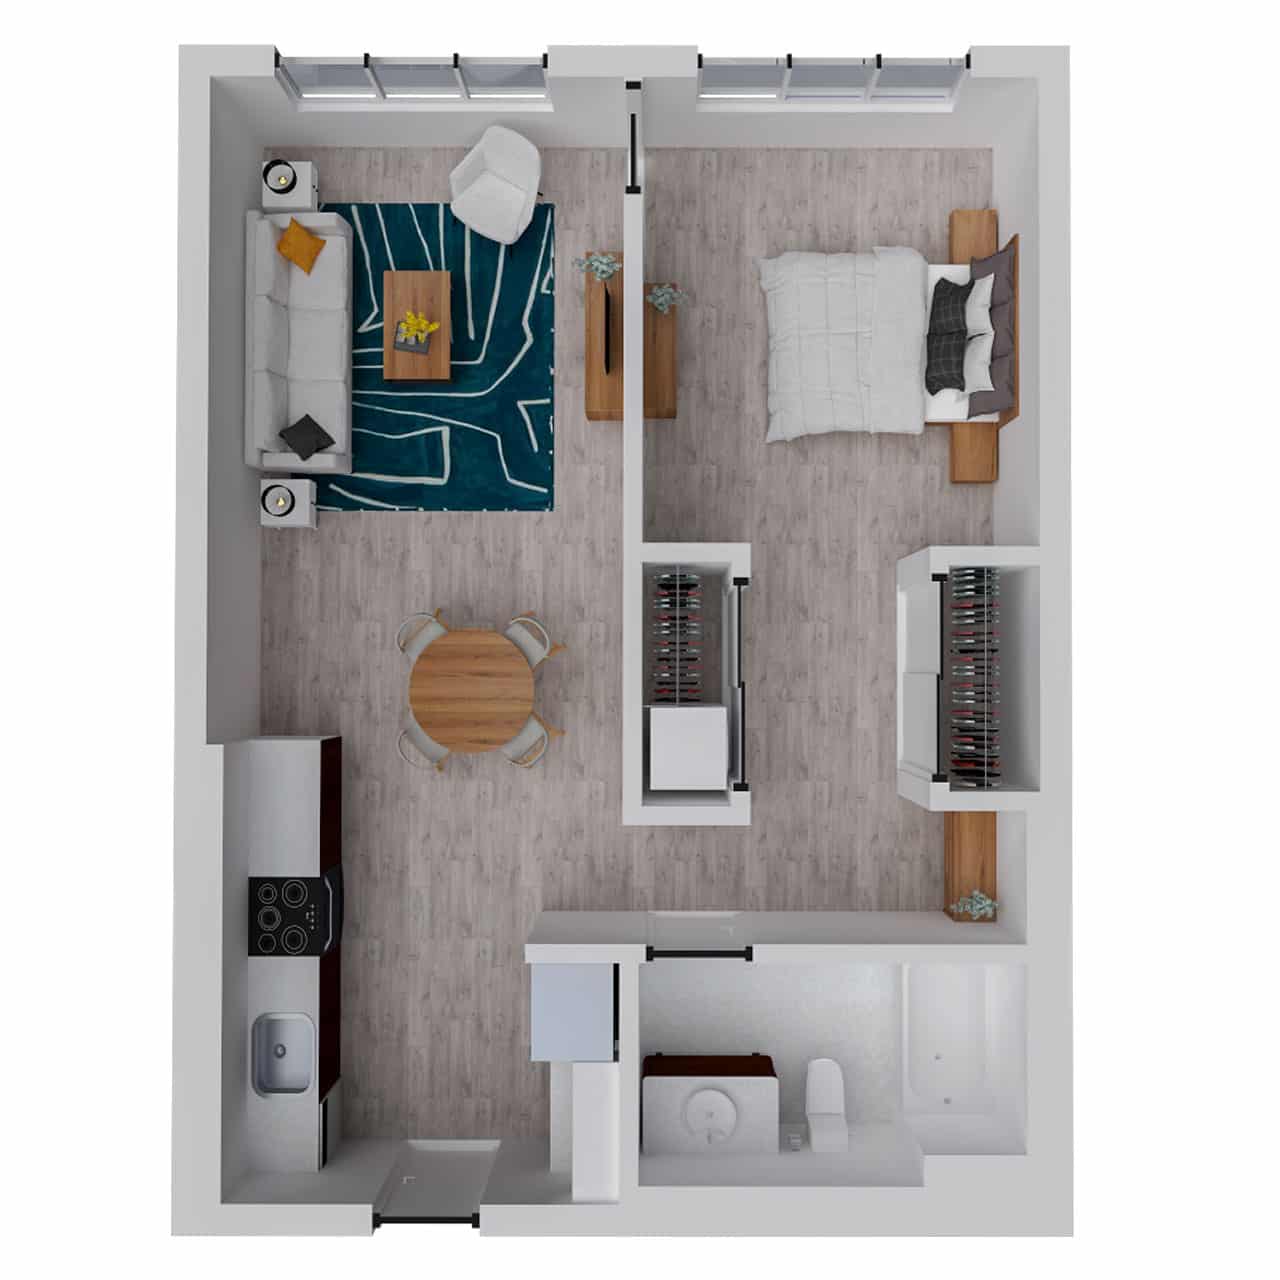 Attwell, A12 floor plan, one bedroom, one bath.